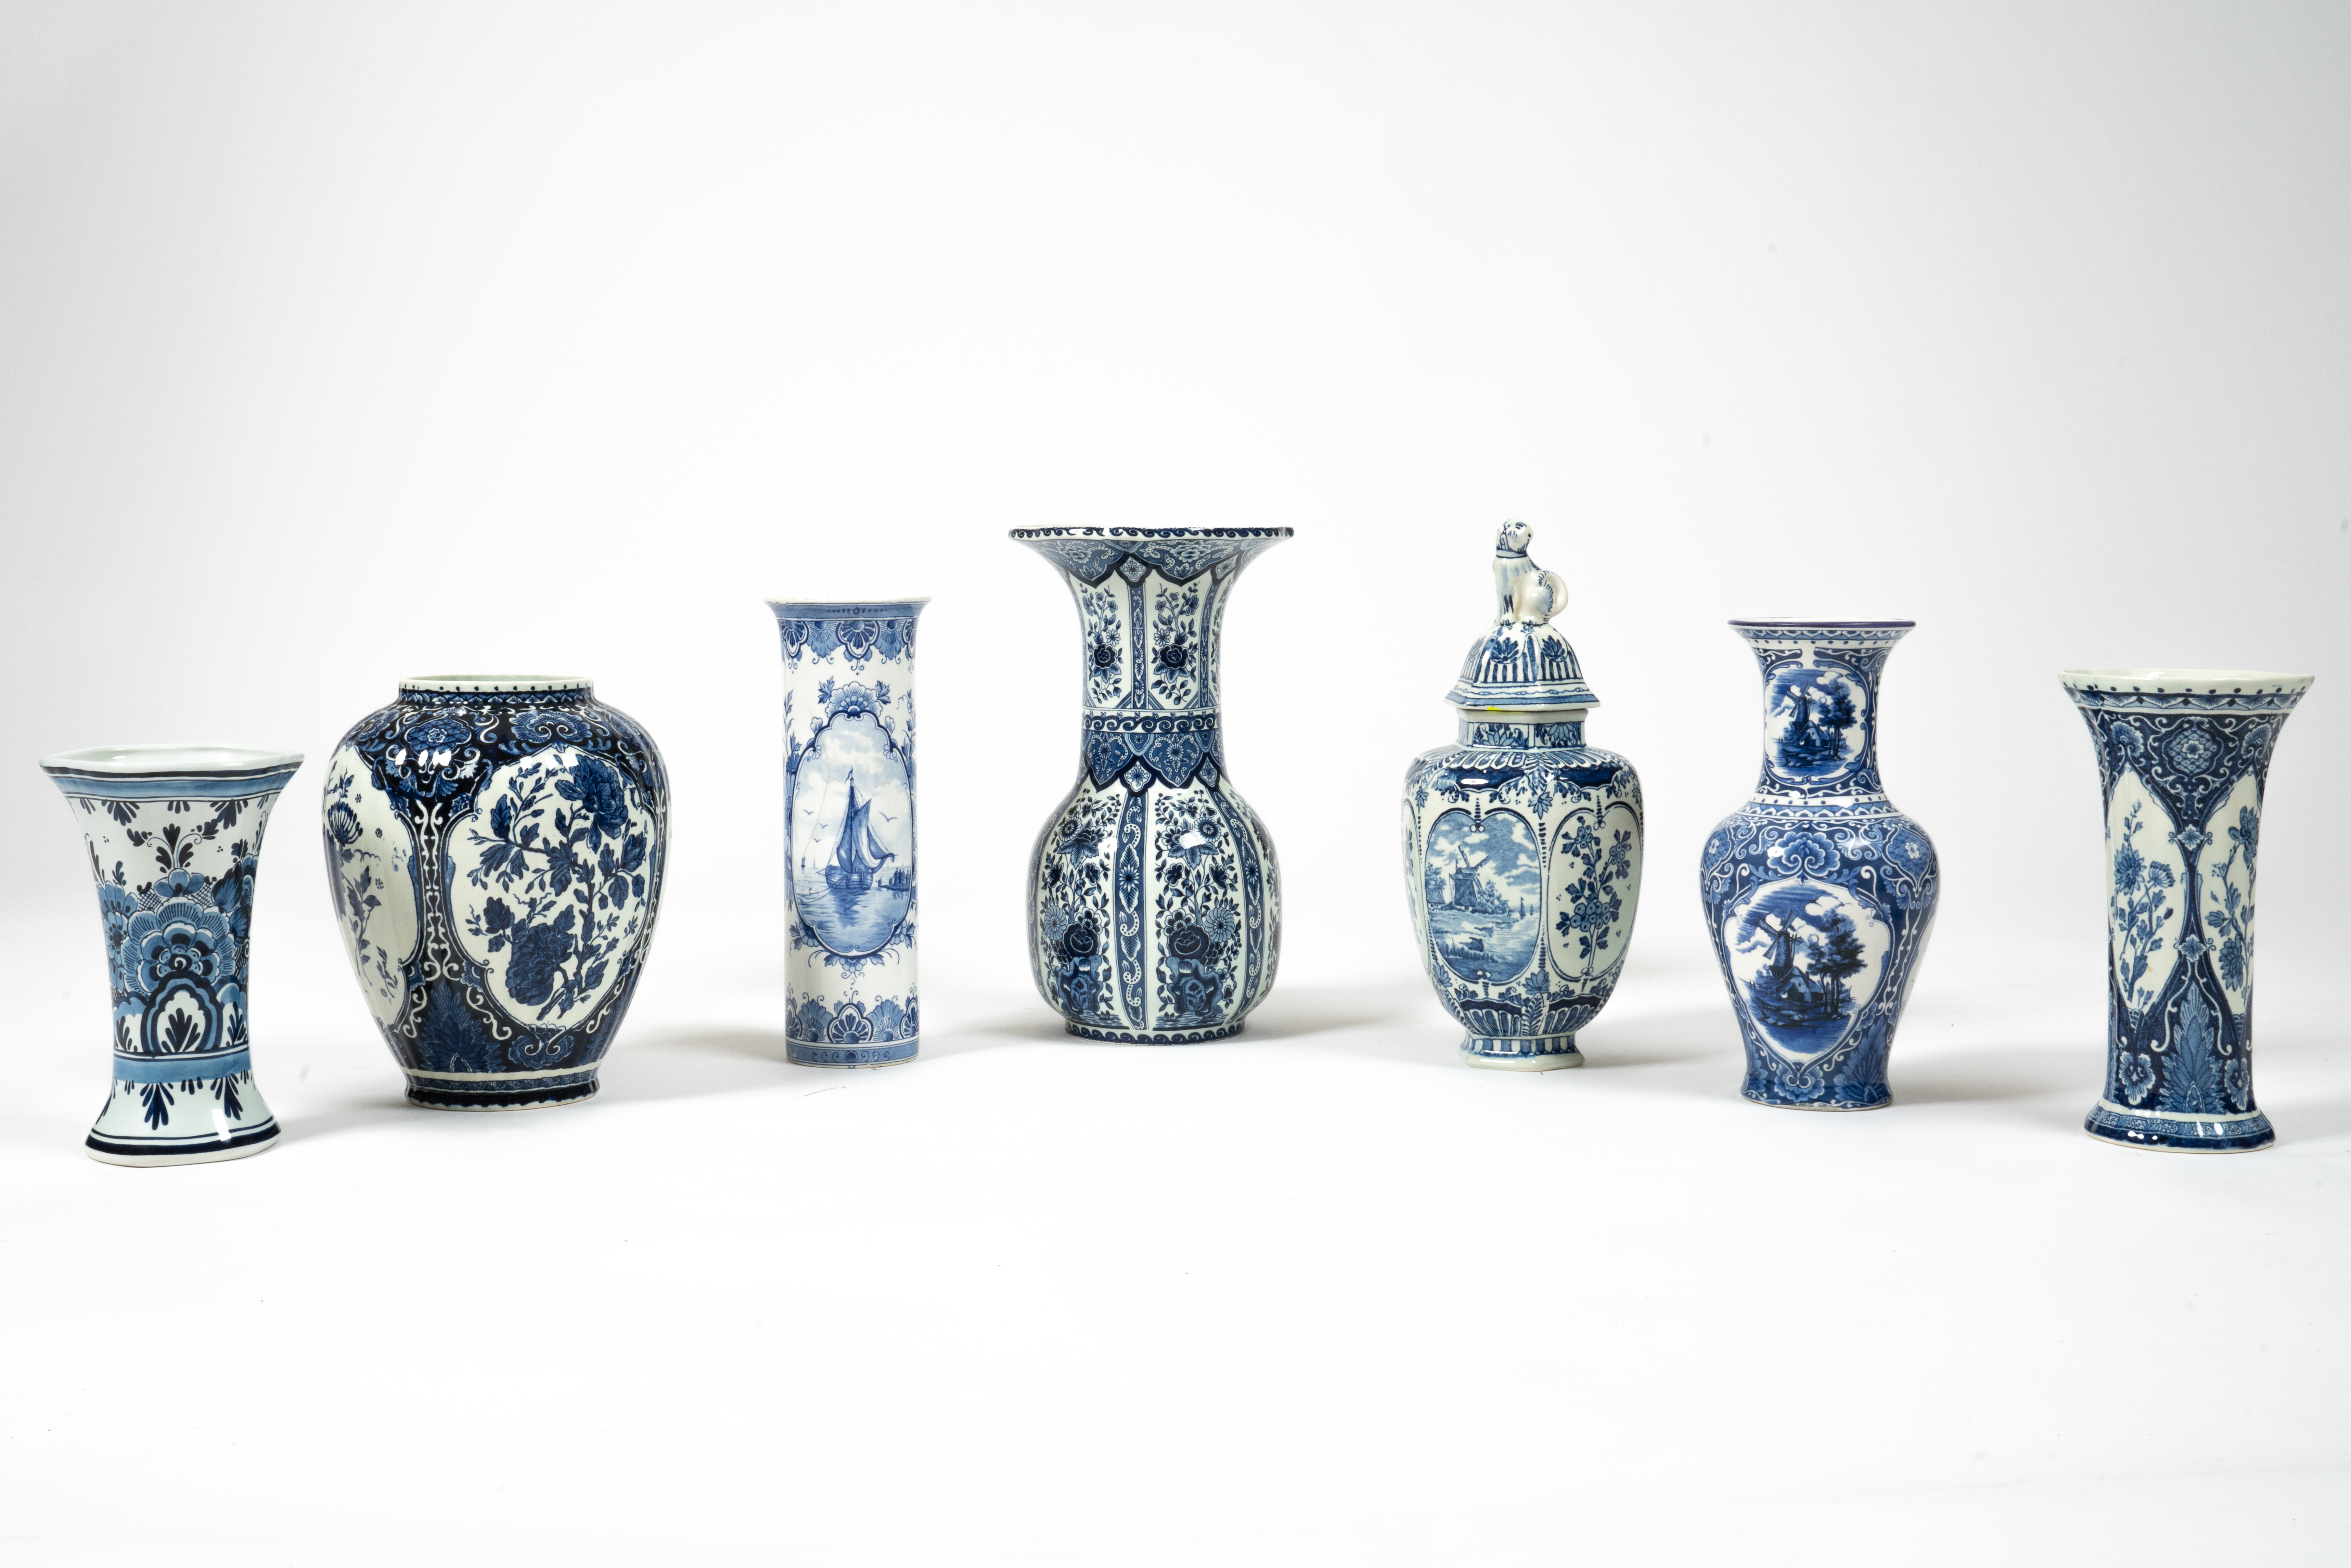 Vintage 7-piece vases set made of blue and white porcelain